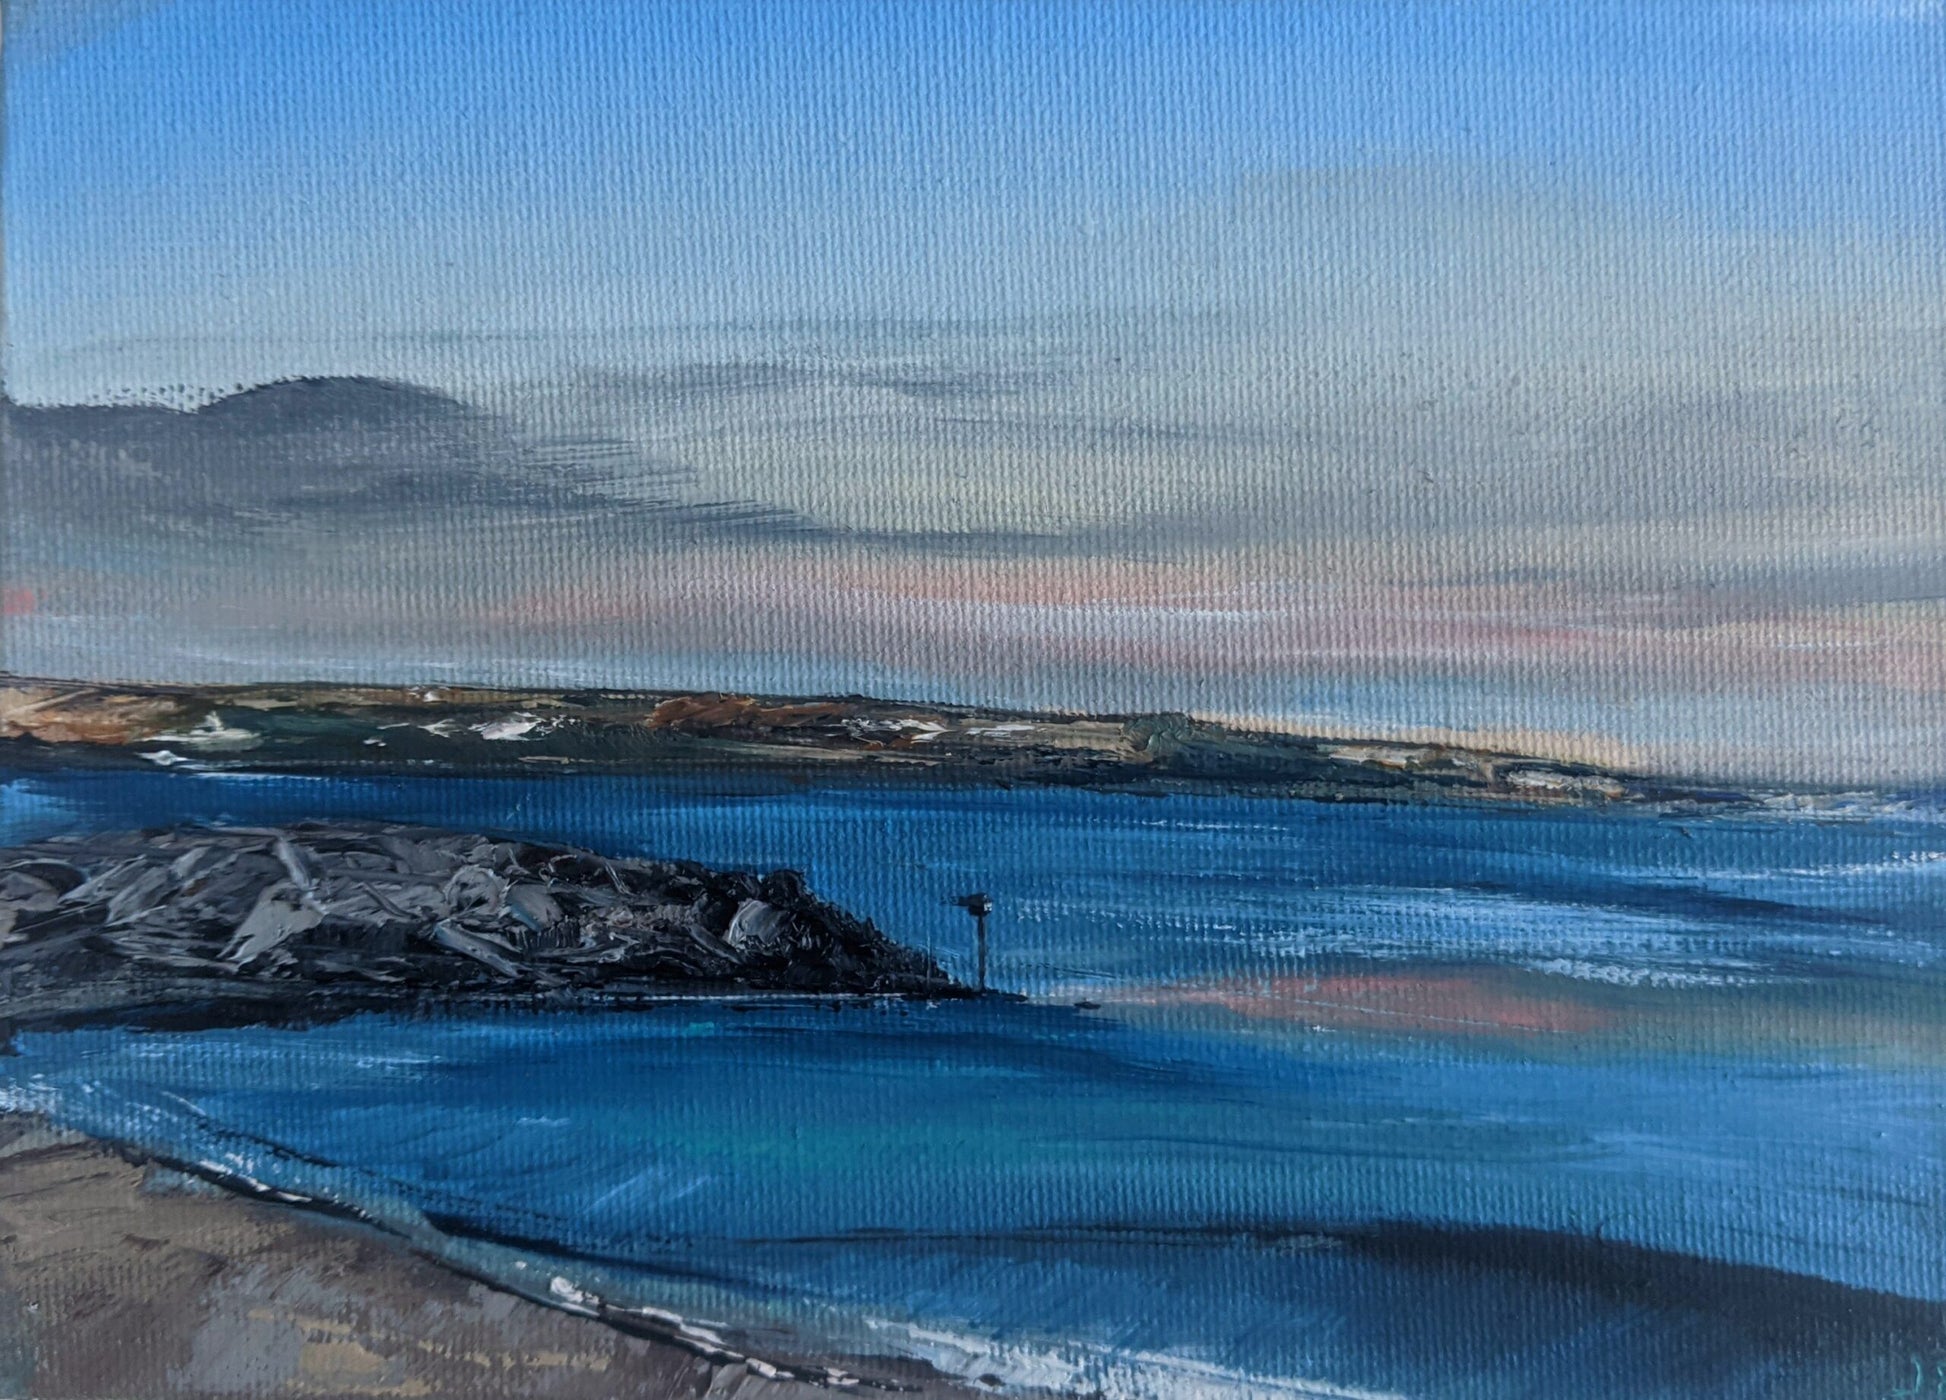 Miniature Weymouth seascape oil painting on canvas board, by Jo Earl